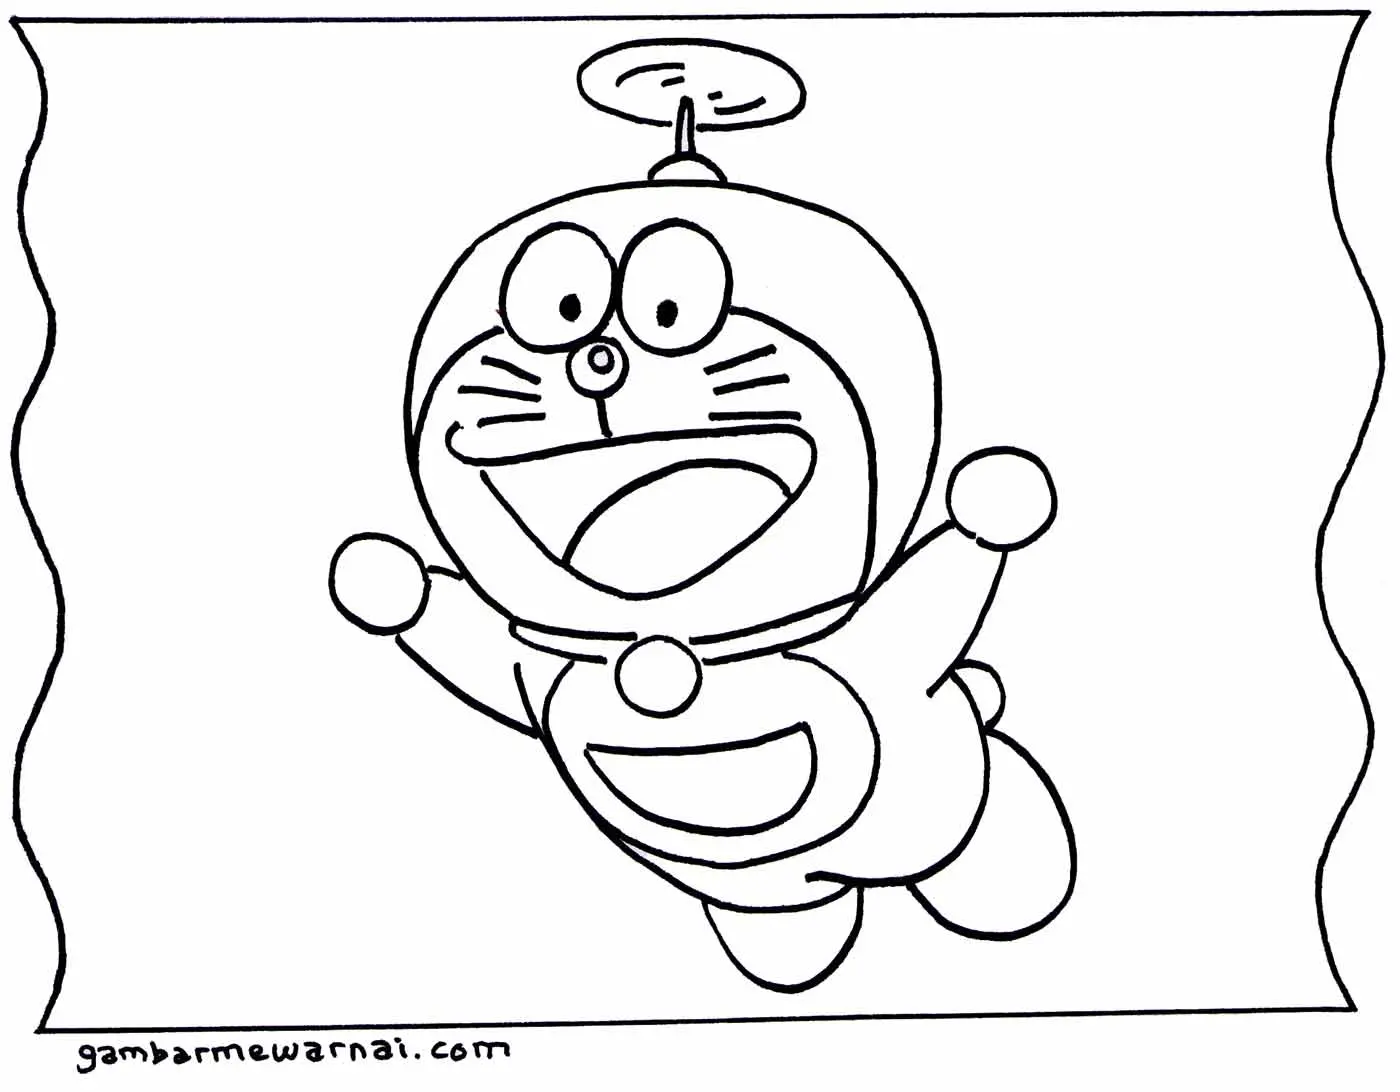 Cara Mudah dan Seru Mewarnai Gambar Doraemon untuk Pemula